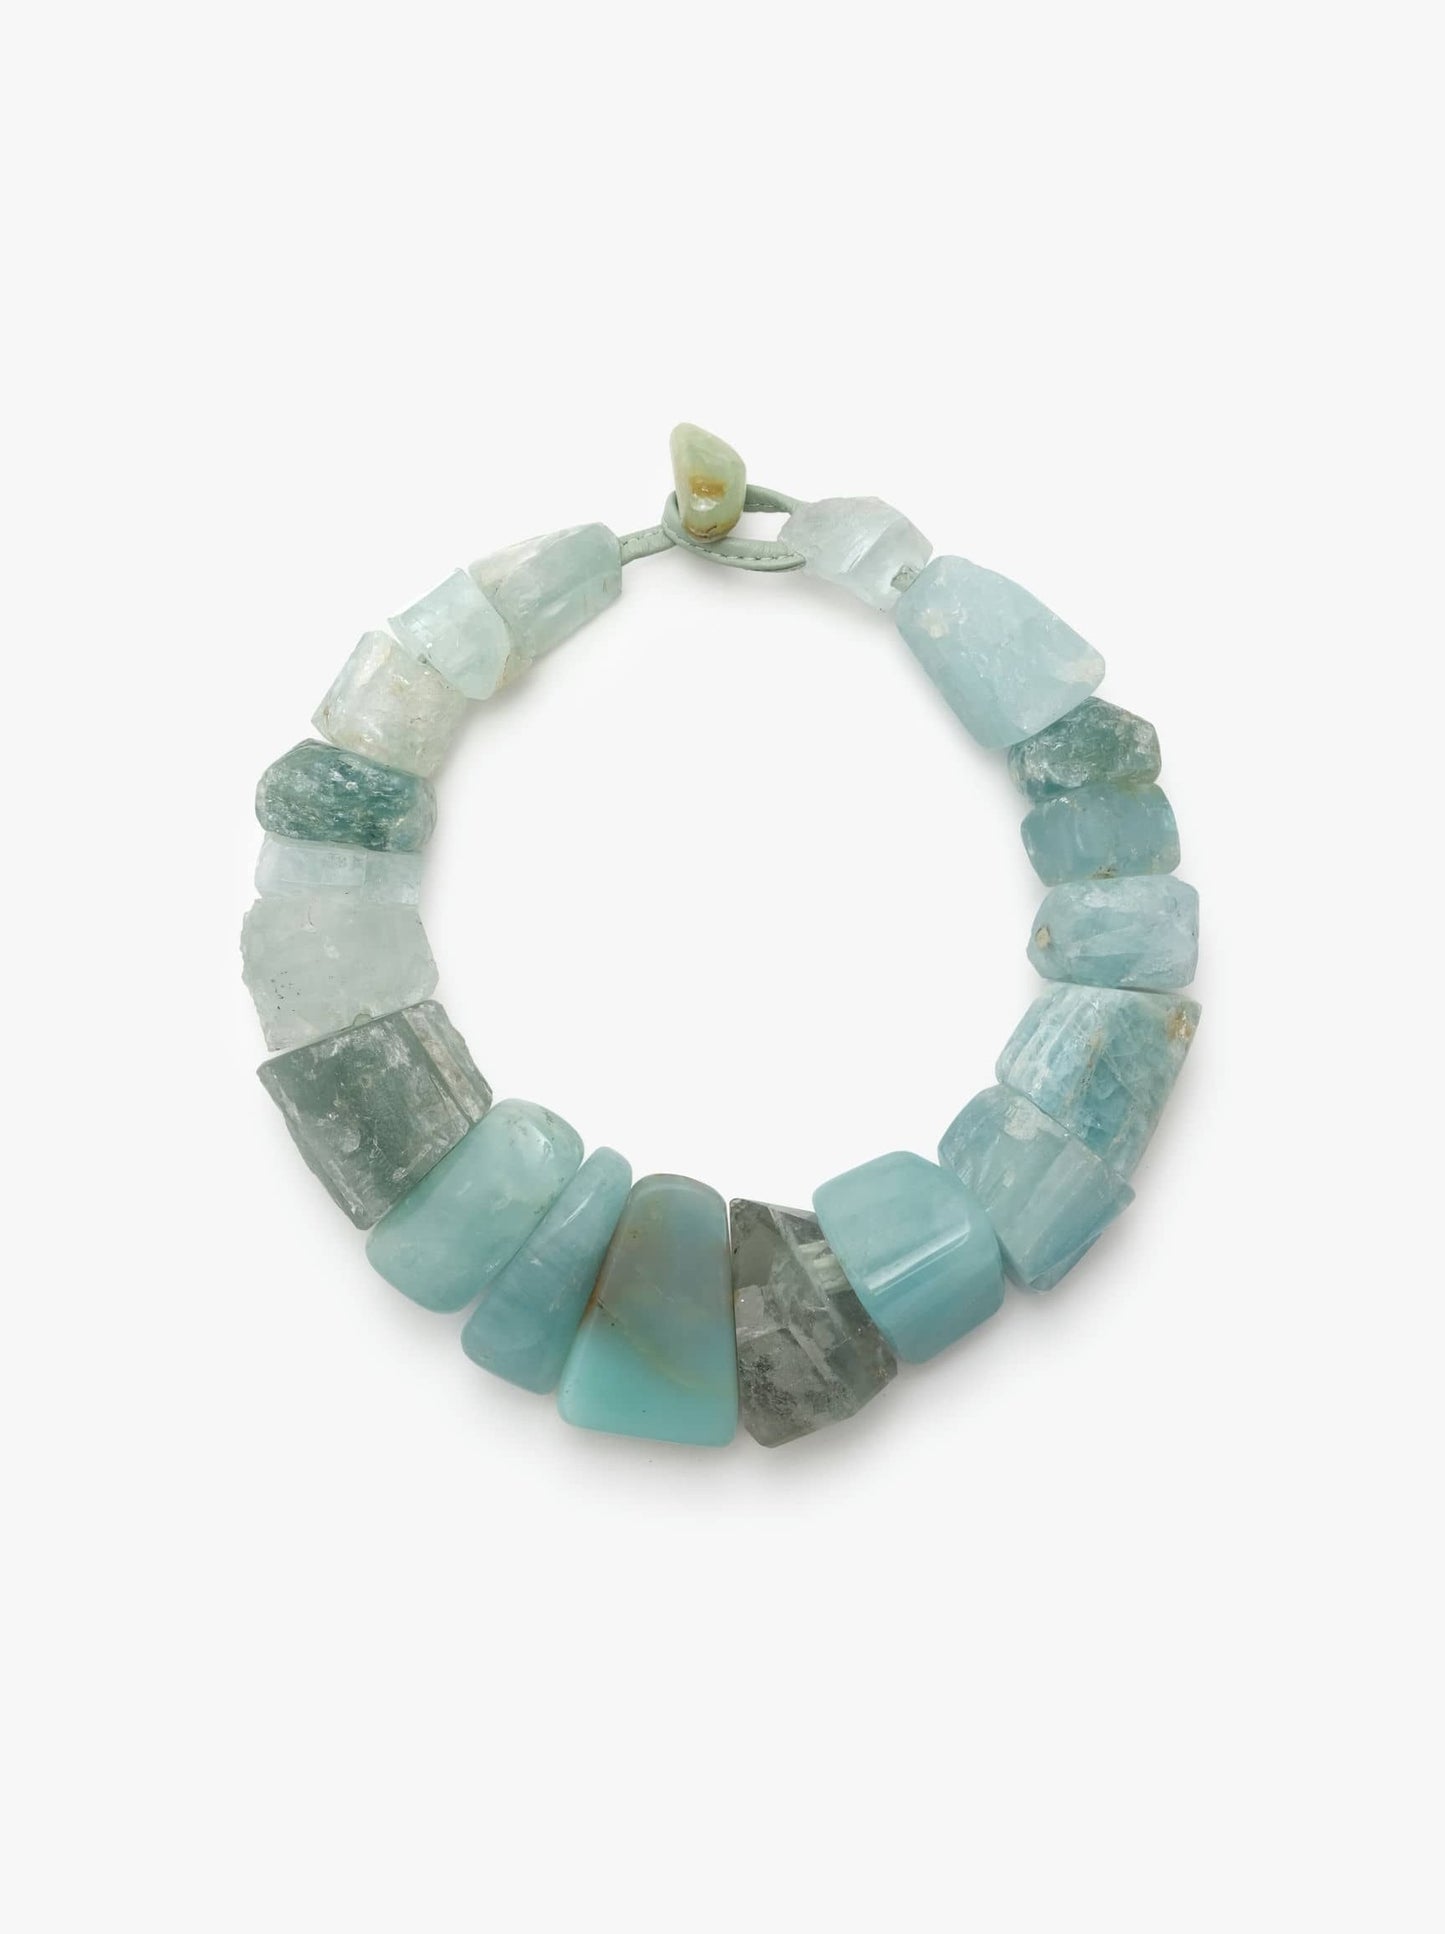 50th anniversary necklace: aquamarine